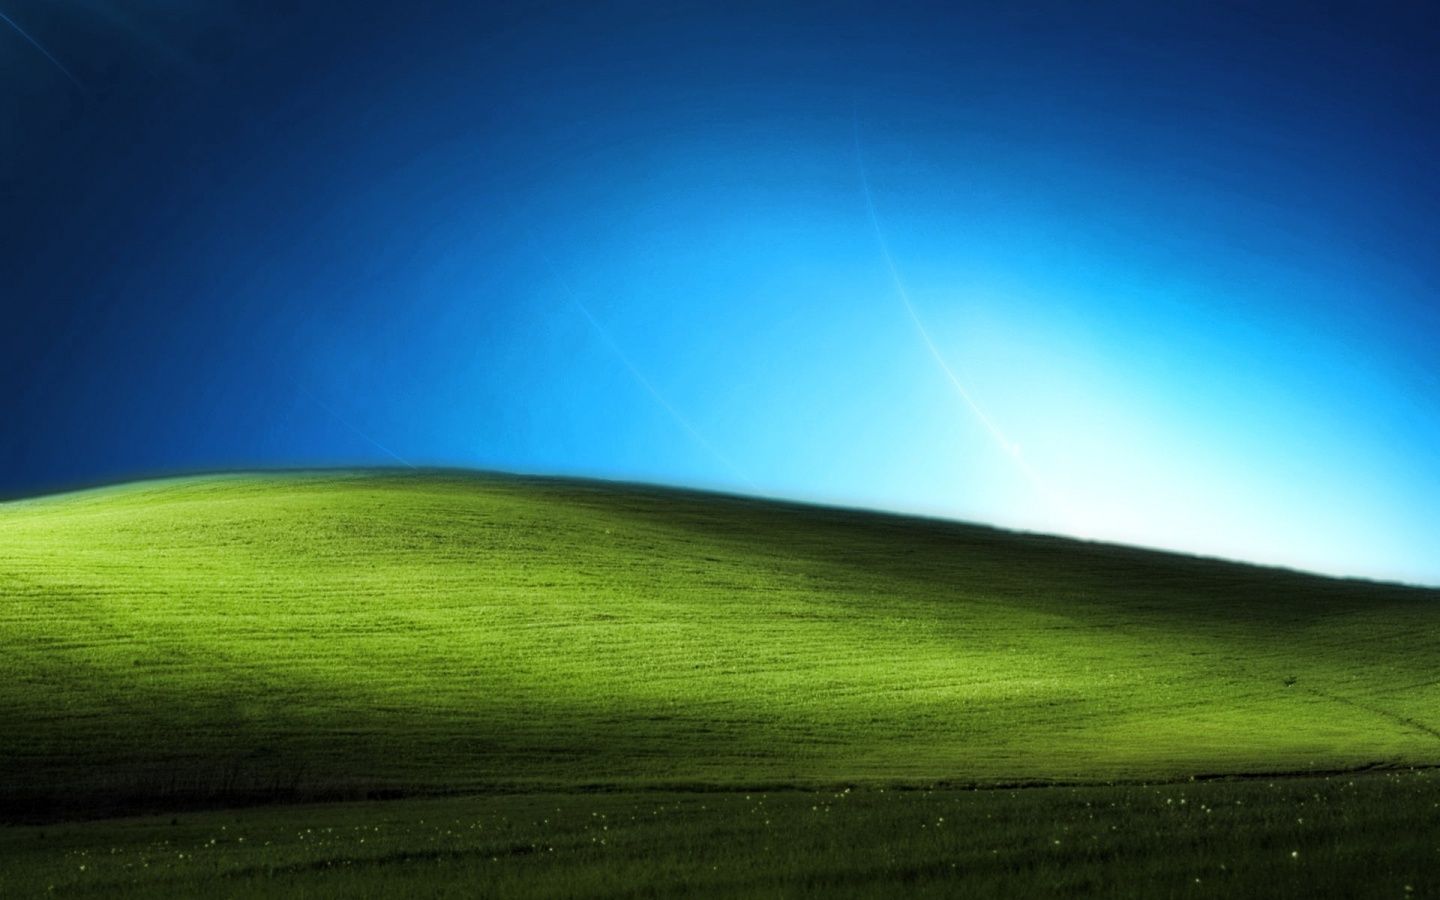 Windows Xp bliss desktop PC and Mac wallpaper